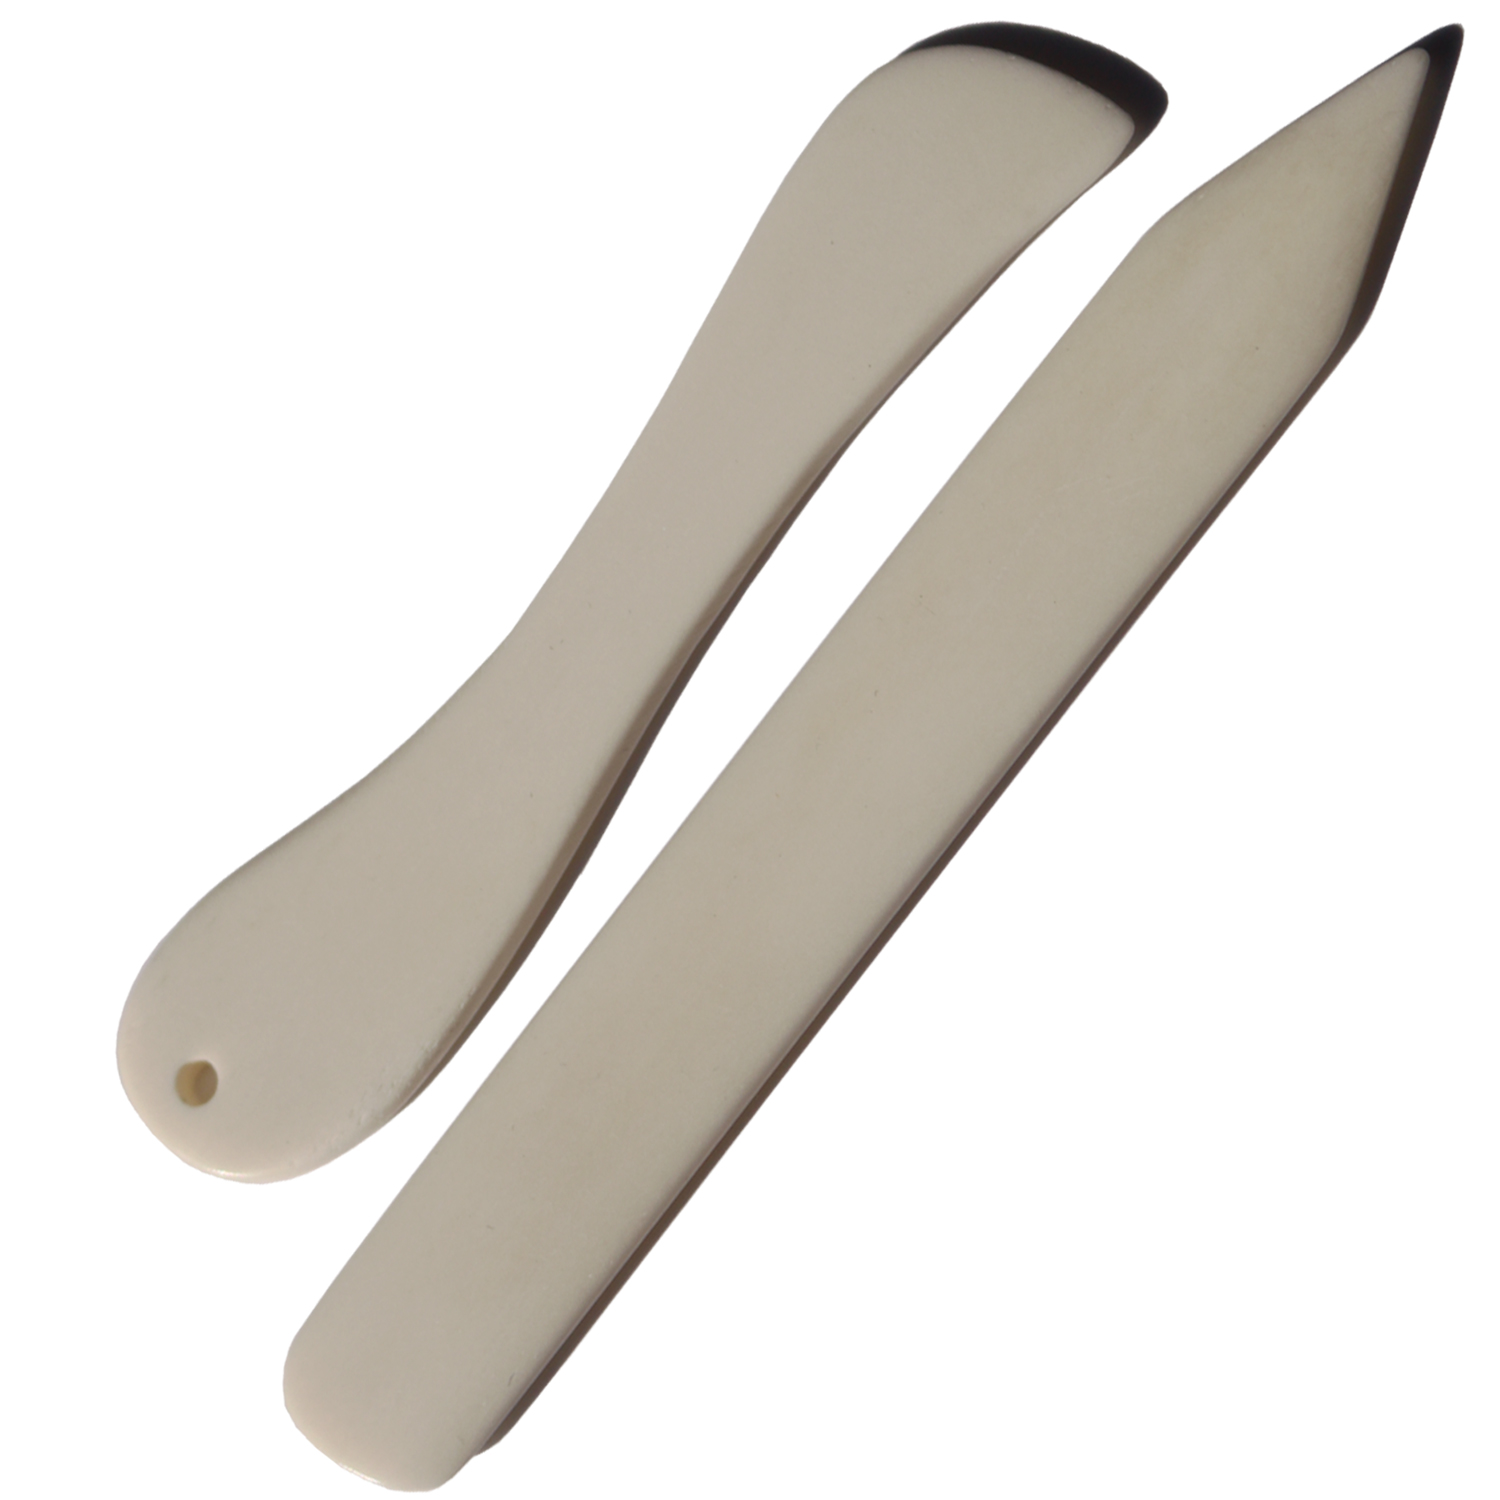 CrafTreat Teflon Bone Folder and Scoring Tool - Lifter - Paper Scorer for Paper